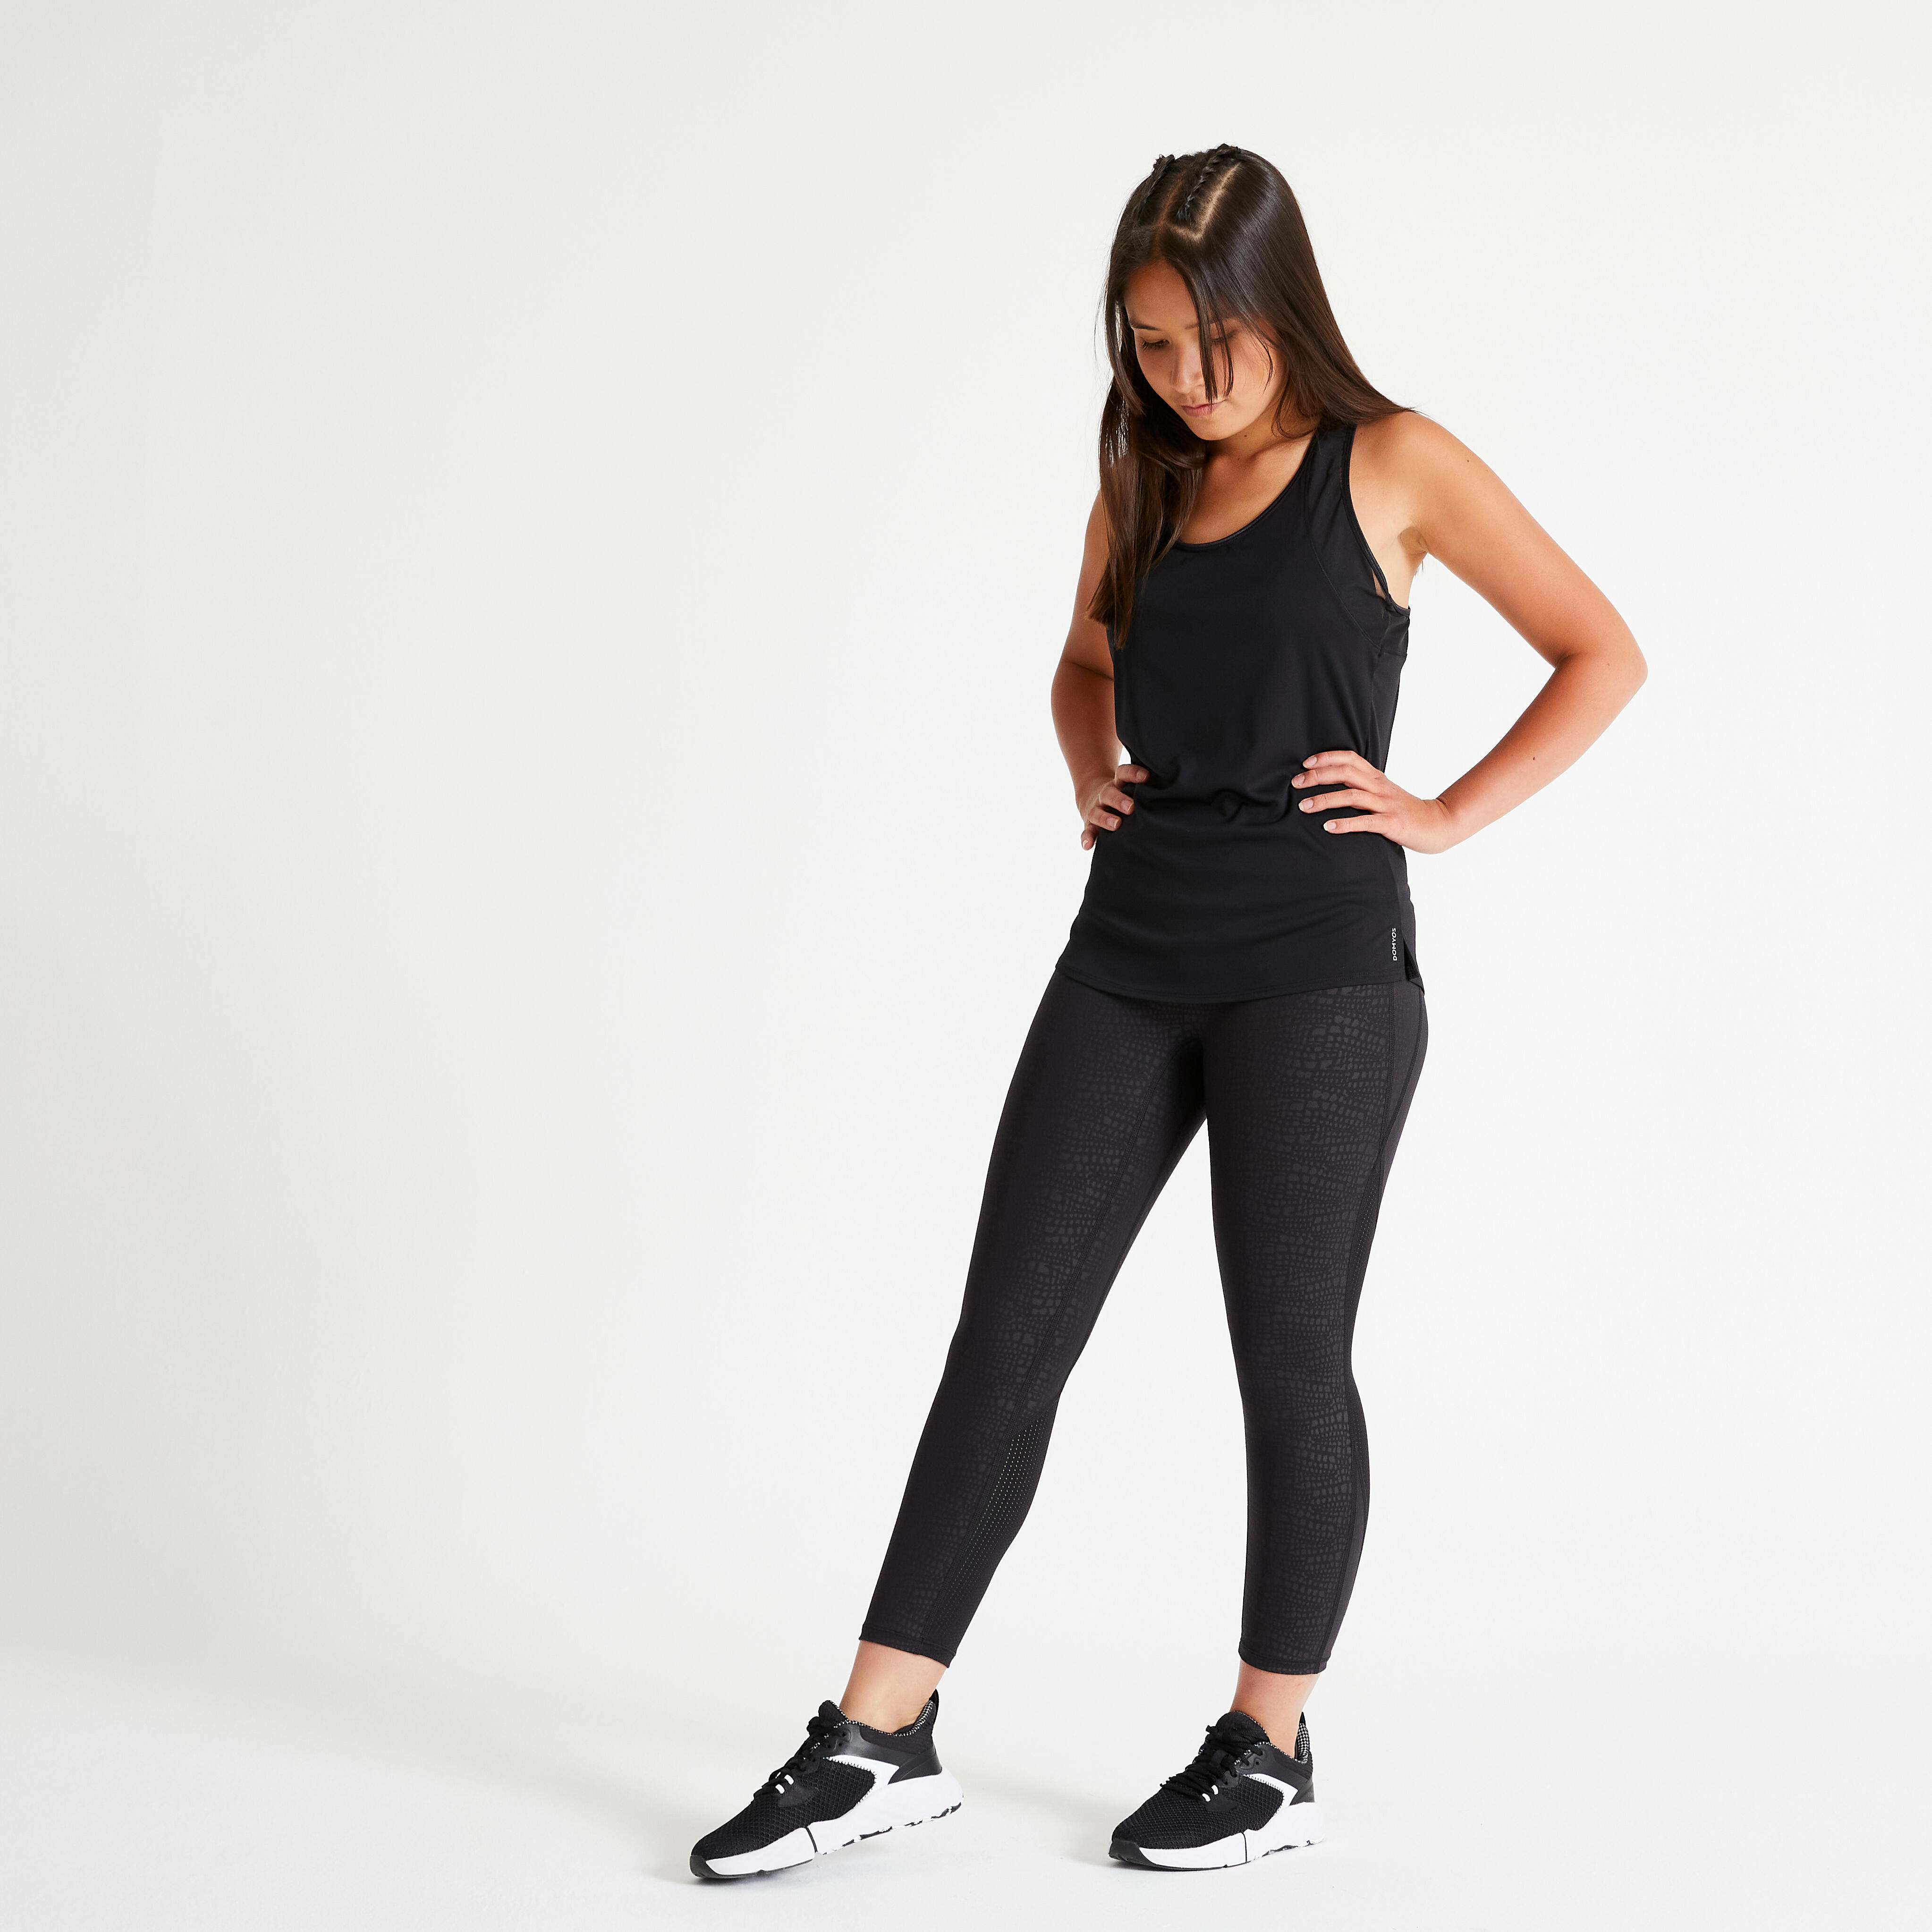 Women’s Fitness High-Waisted Leggings – FLE 500 A Black